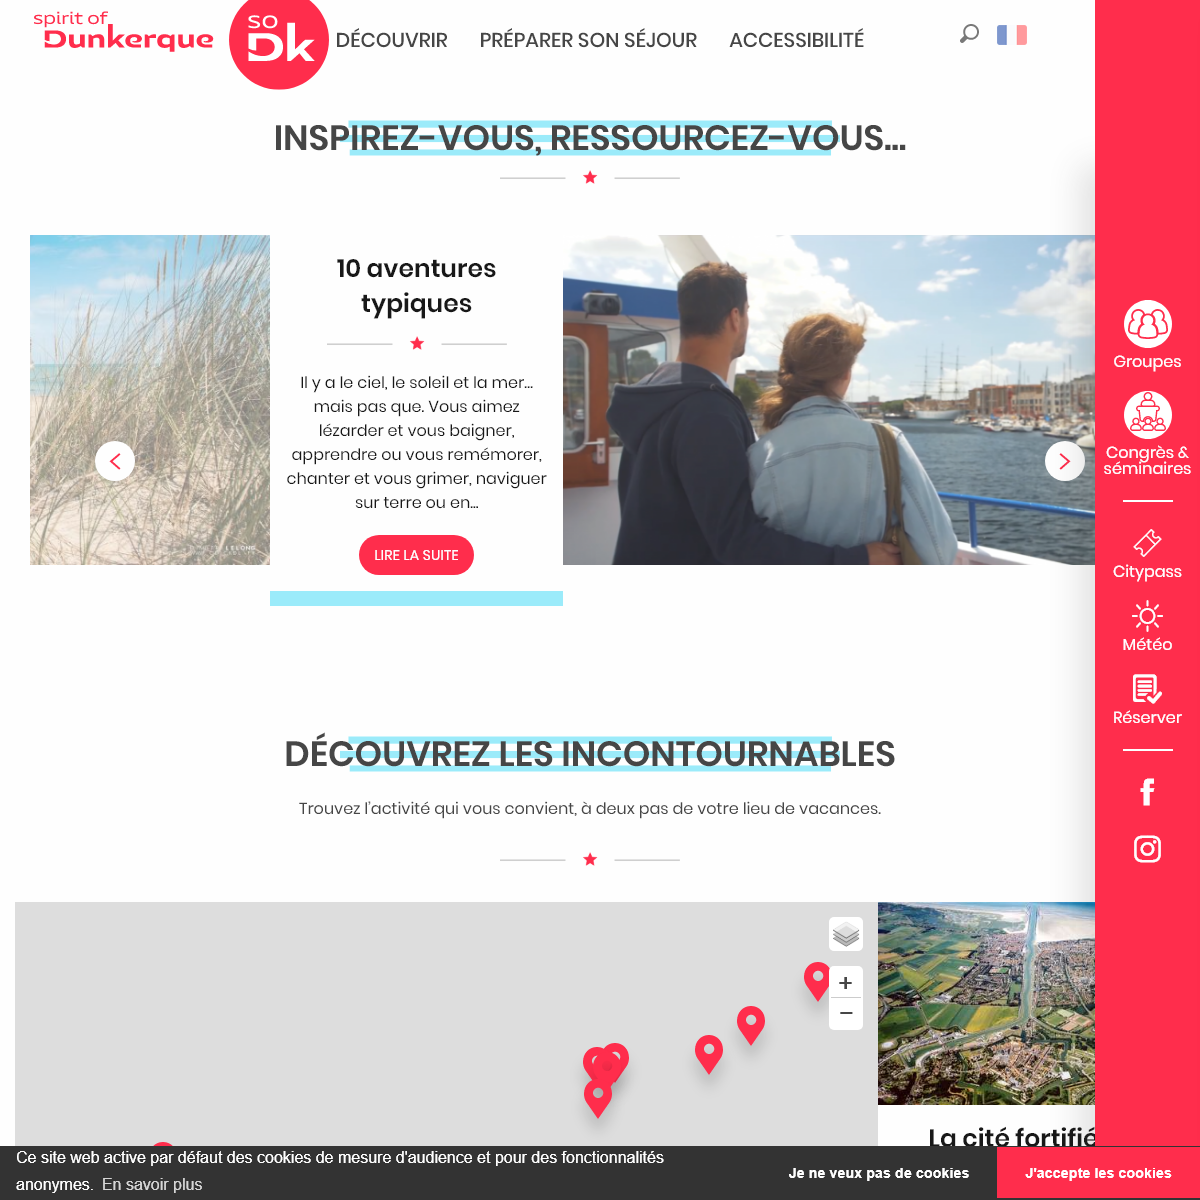 A complete backup of dunkerque-tourisme.fr